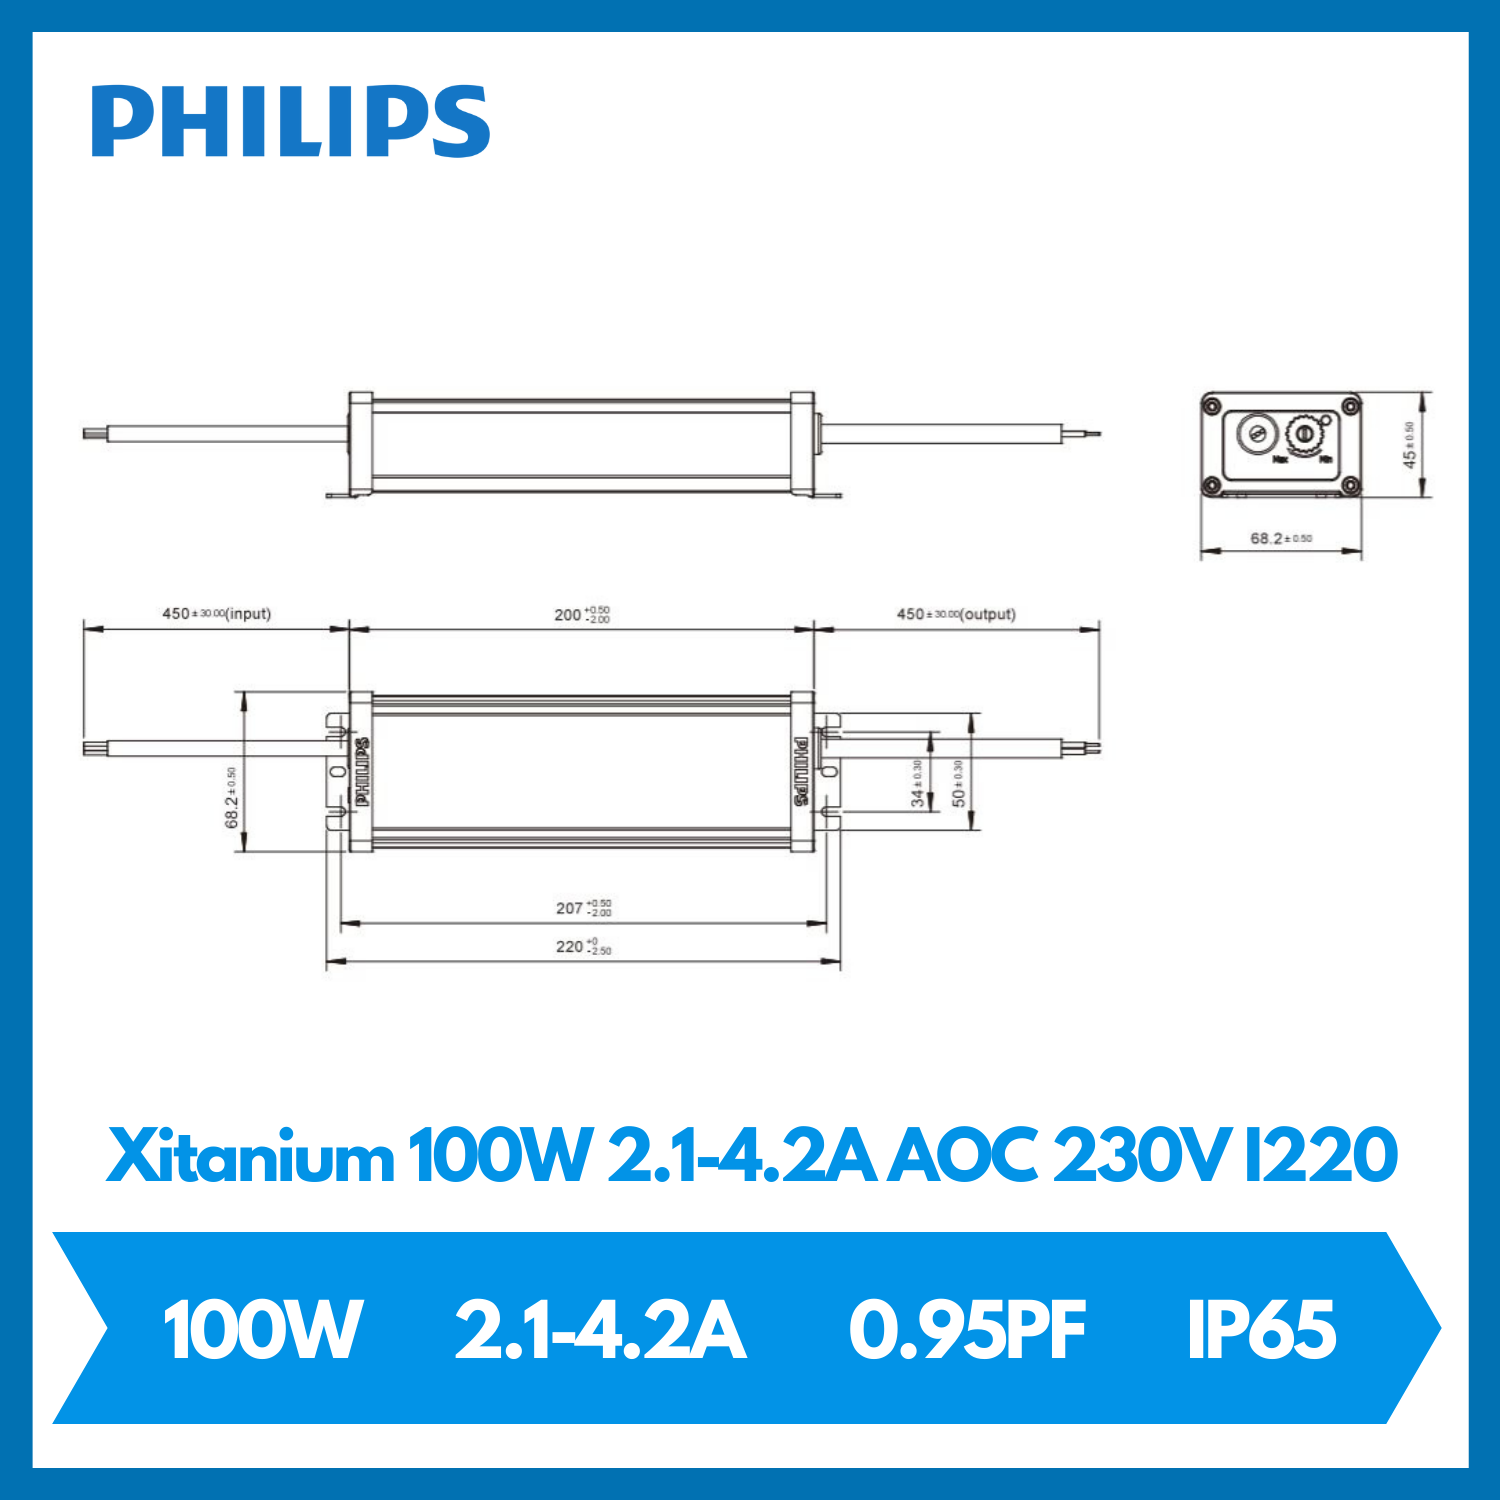 PHILIPS Xitanium 100W 2.1-4.2A AOC 230V I220